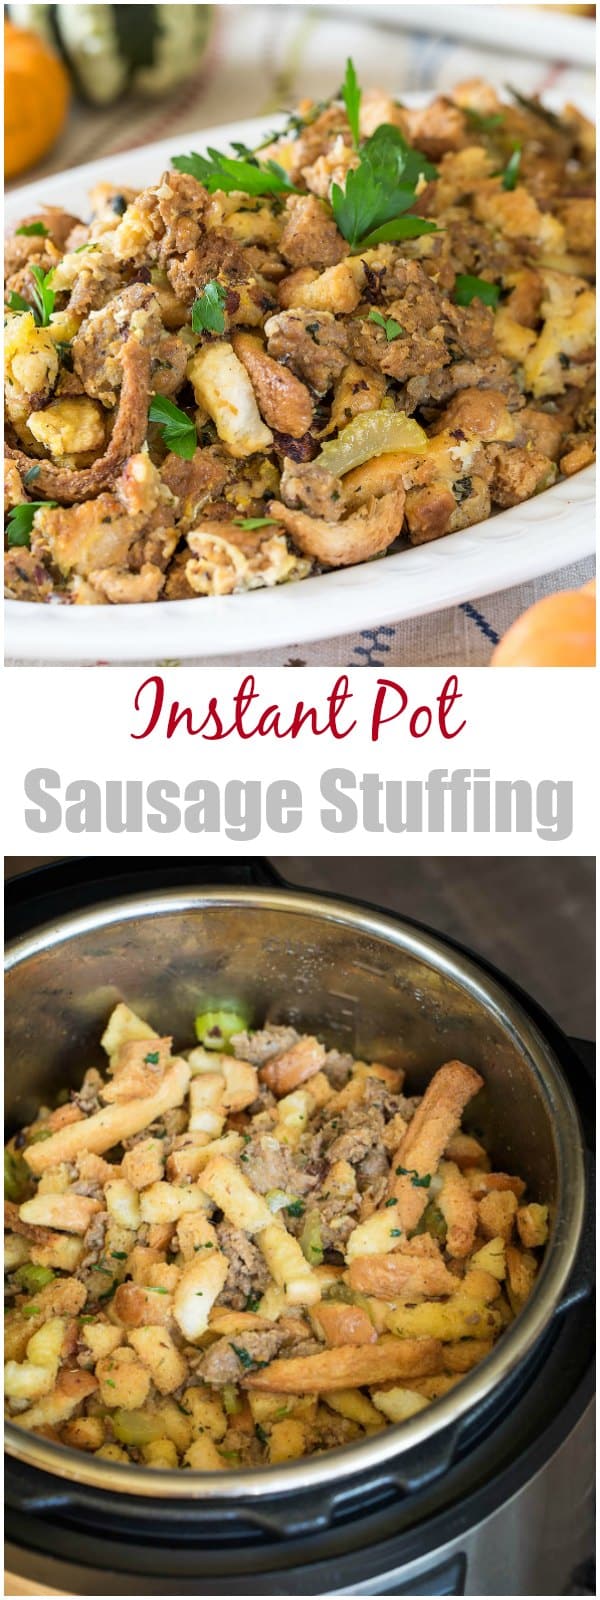 Instant Pot Sausage Stuffing - Easy Thanksgiving side dish under 45 minutes! #ThanksgivingMenu #ThanksgivingRecipe #Stuffing #SausageStuffing